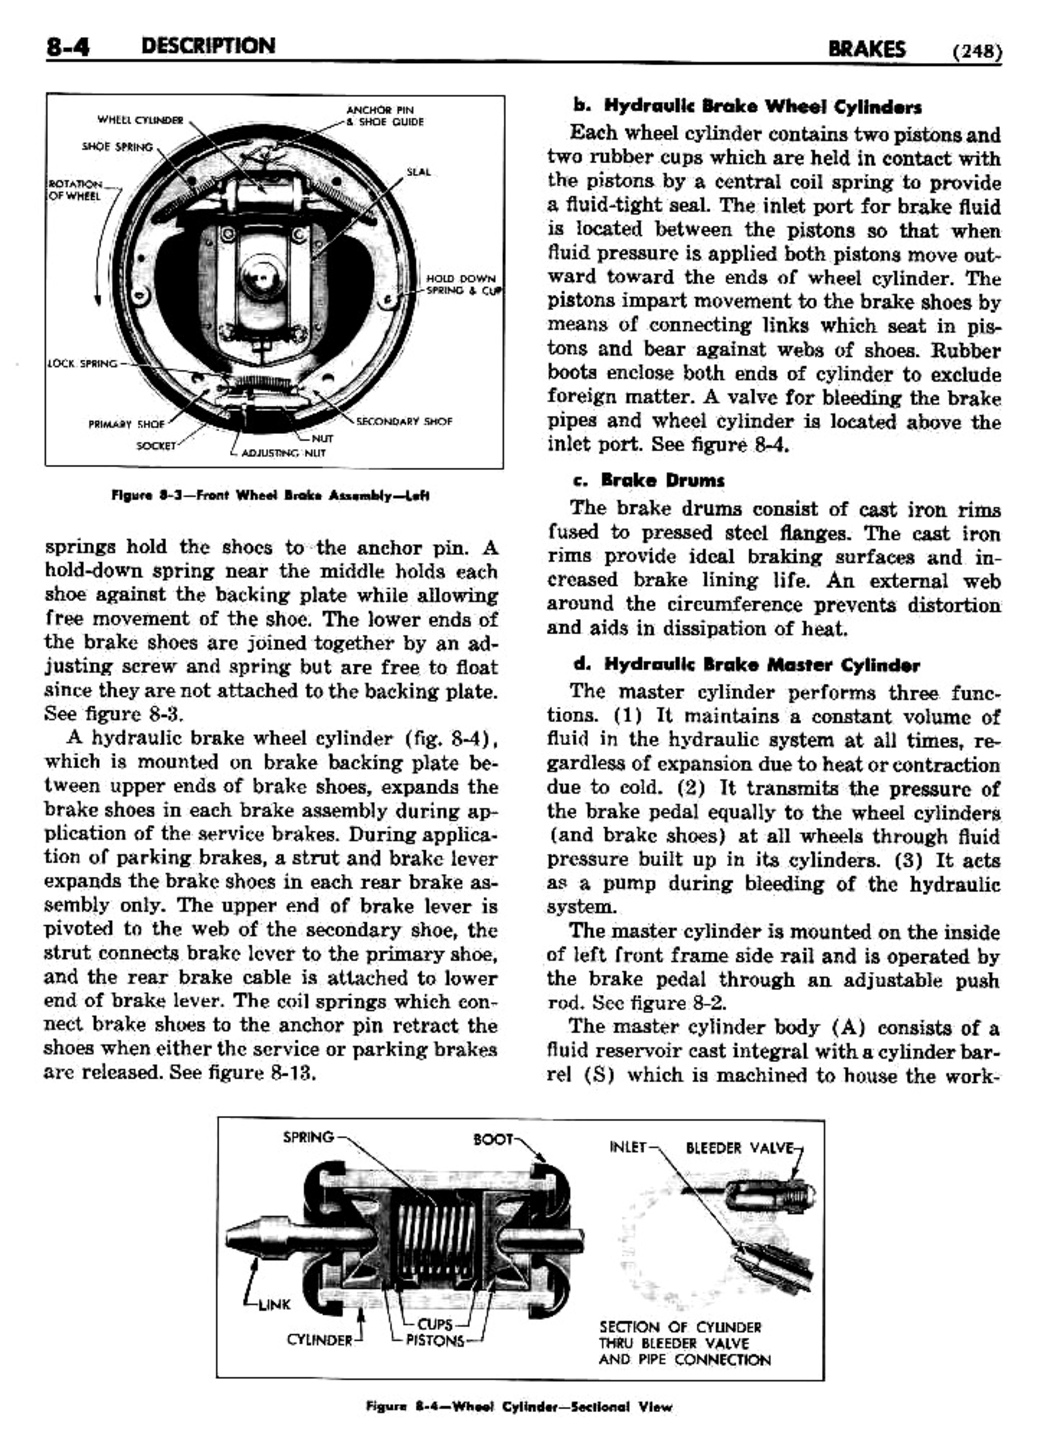 n_09 1948 Buick Shop Manual - Brakes-004-004.jpg